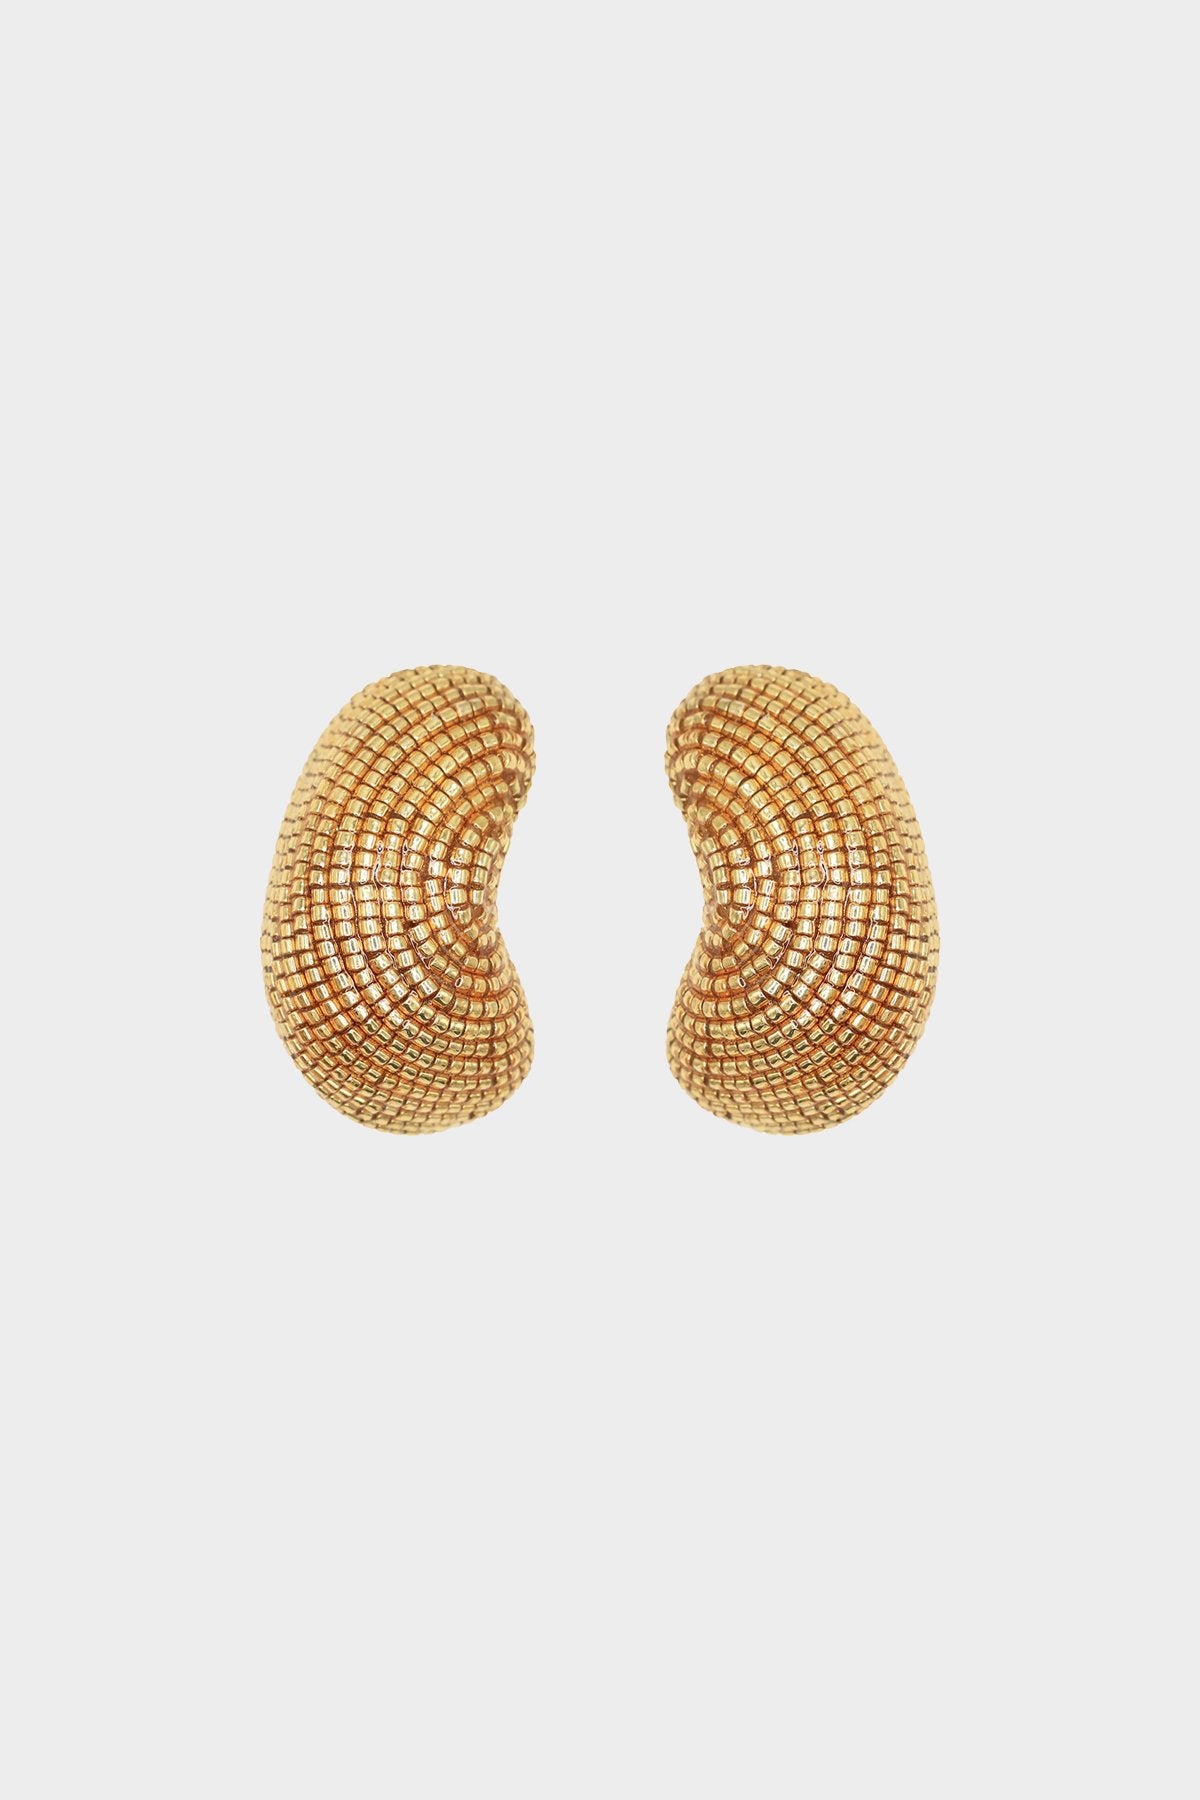 Mini Arele Earrings in Gold - shop-olivia.com